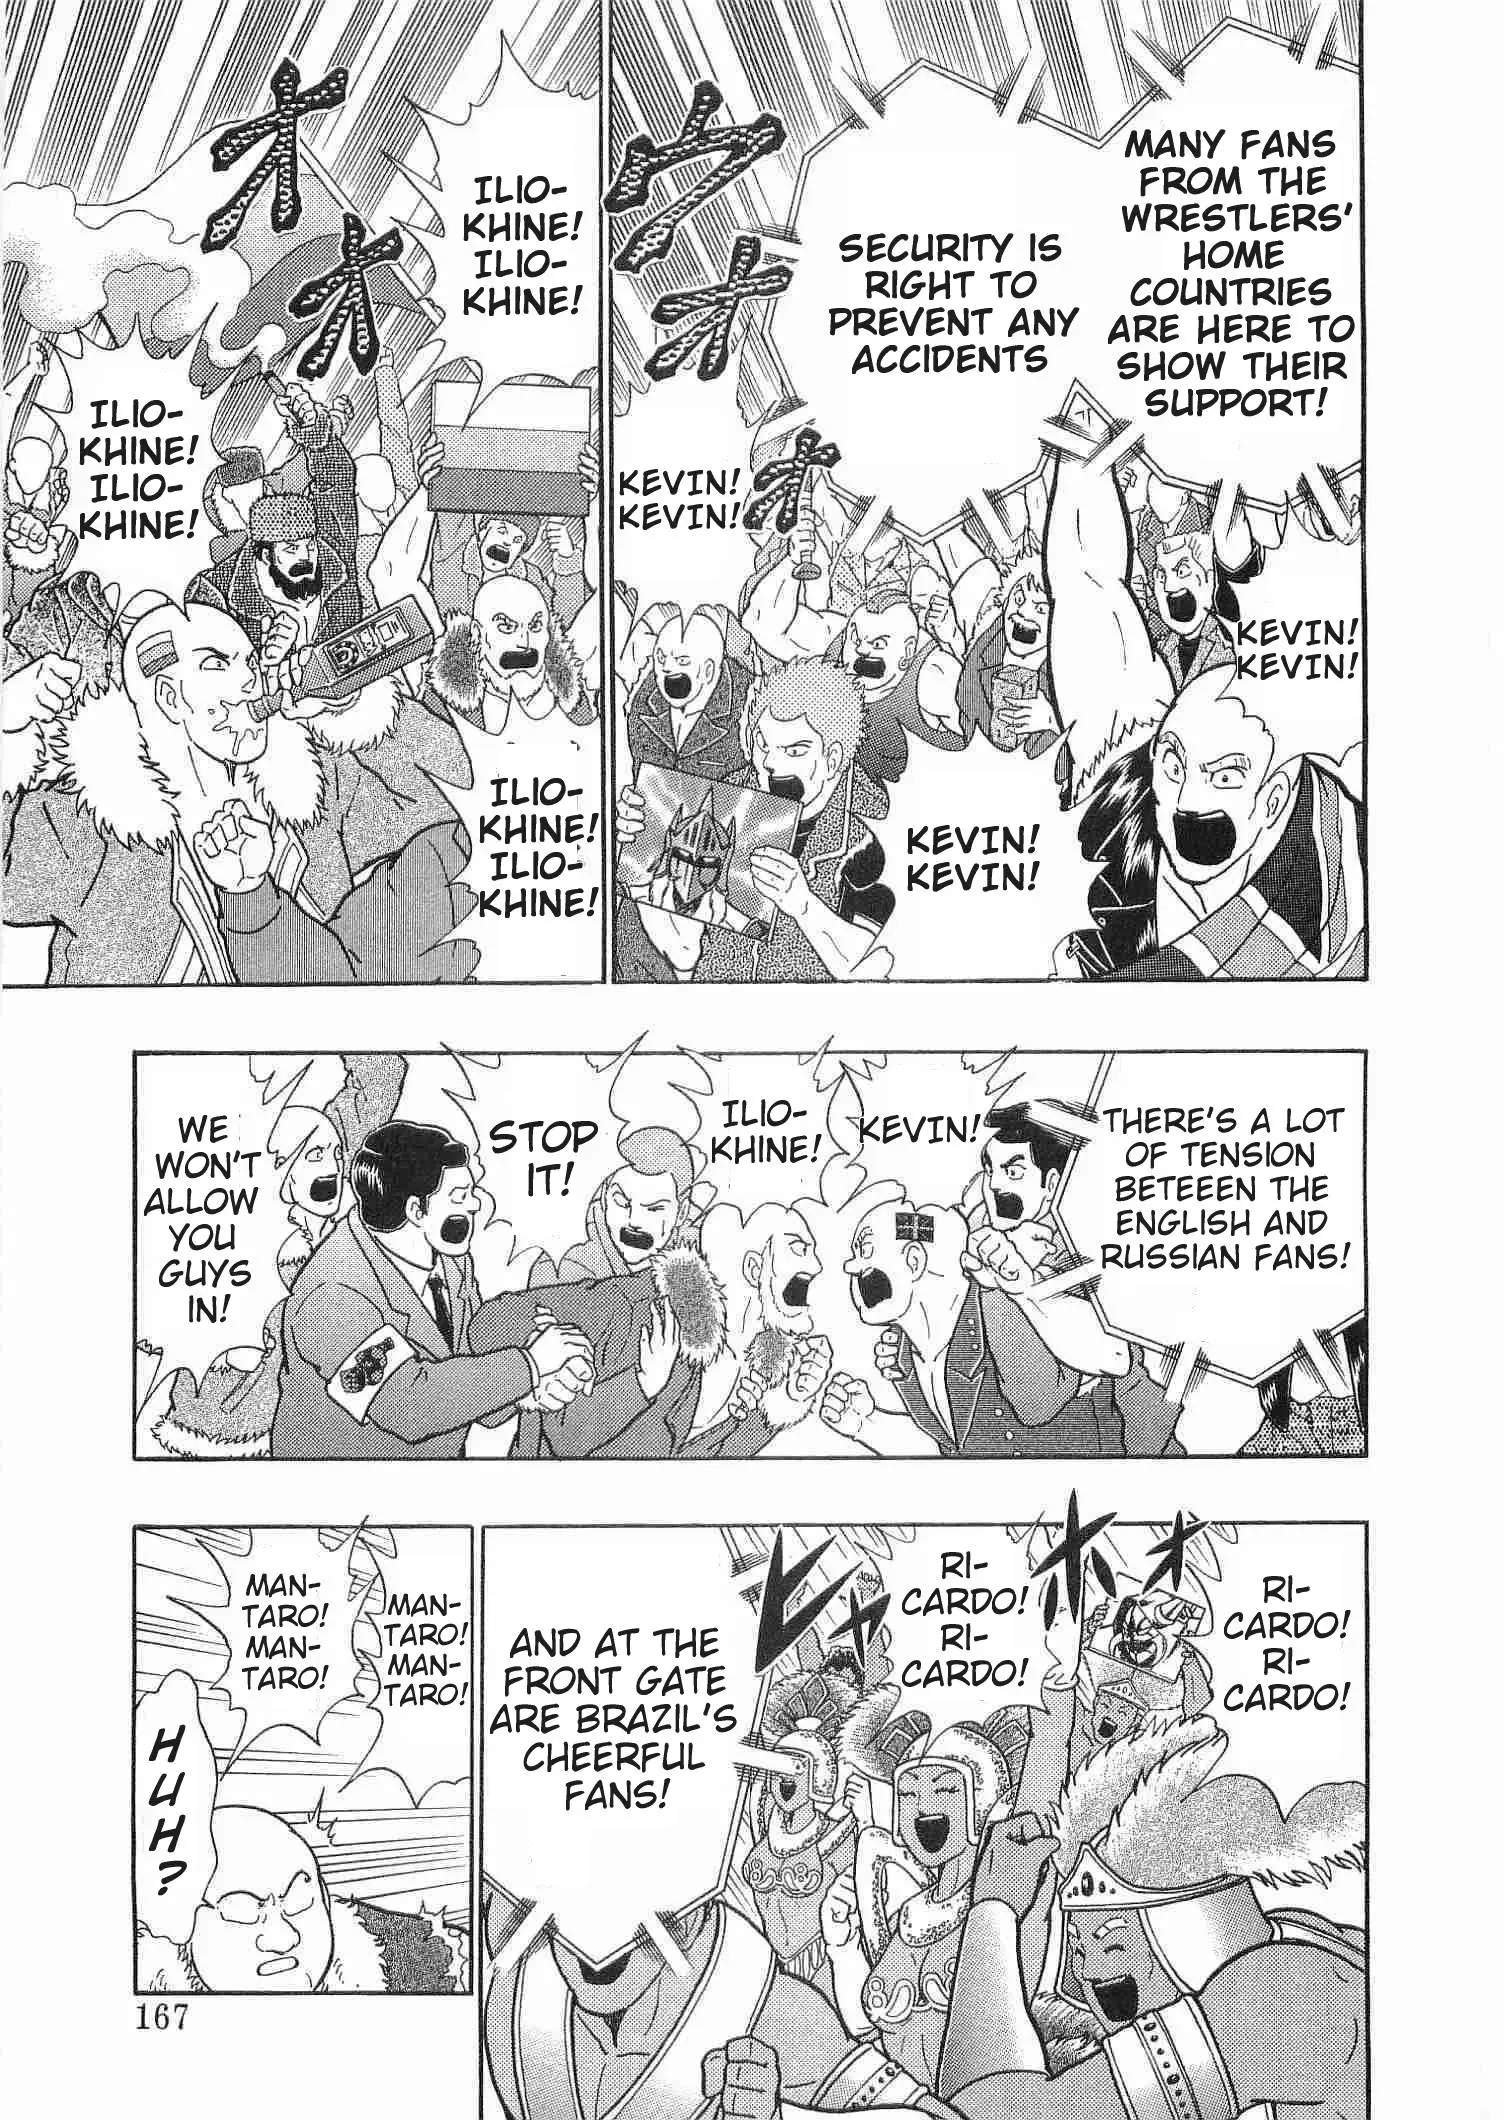 Kinnikuman Ii Sei: Kyuukyoku Choujin Tag Hen - 180 page 9-b7f93b9b